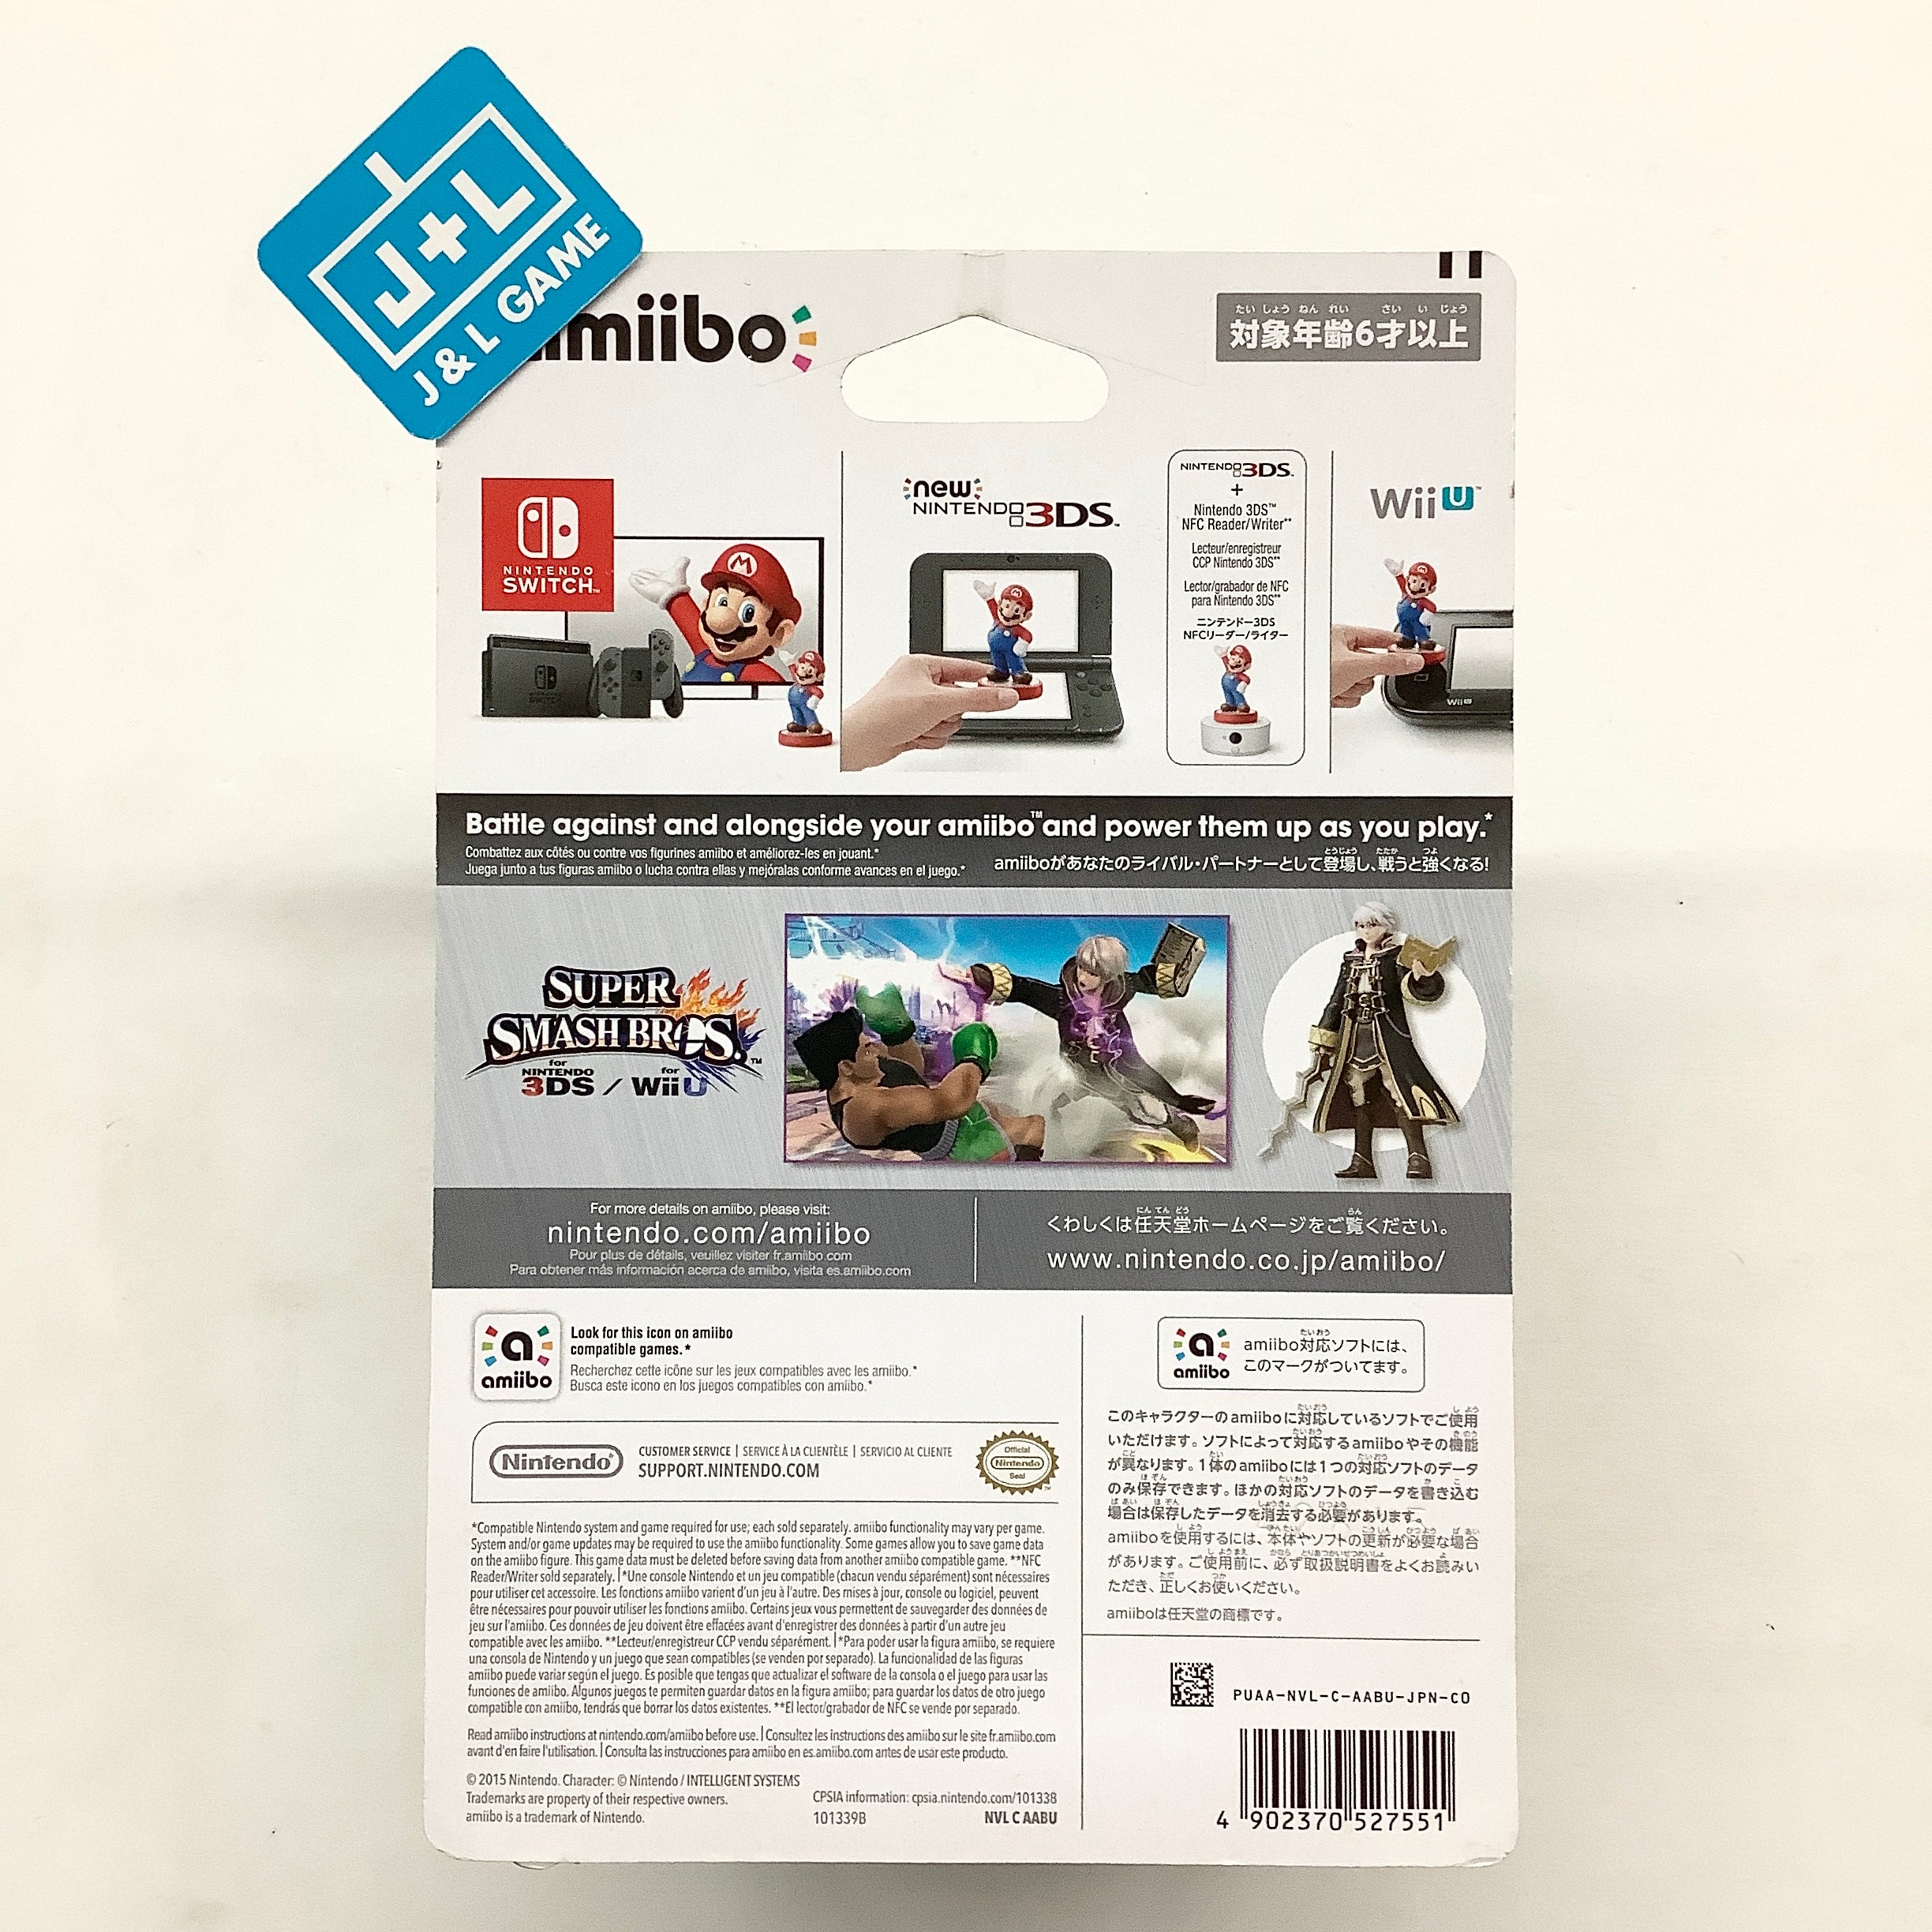 Robin (Super Smash Bros. series) - Nintendo WiiU Amiibo (Japanese Import) Amiibo Nintendo   